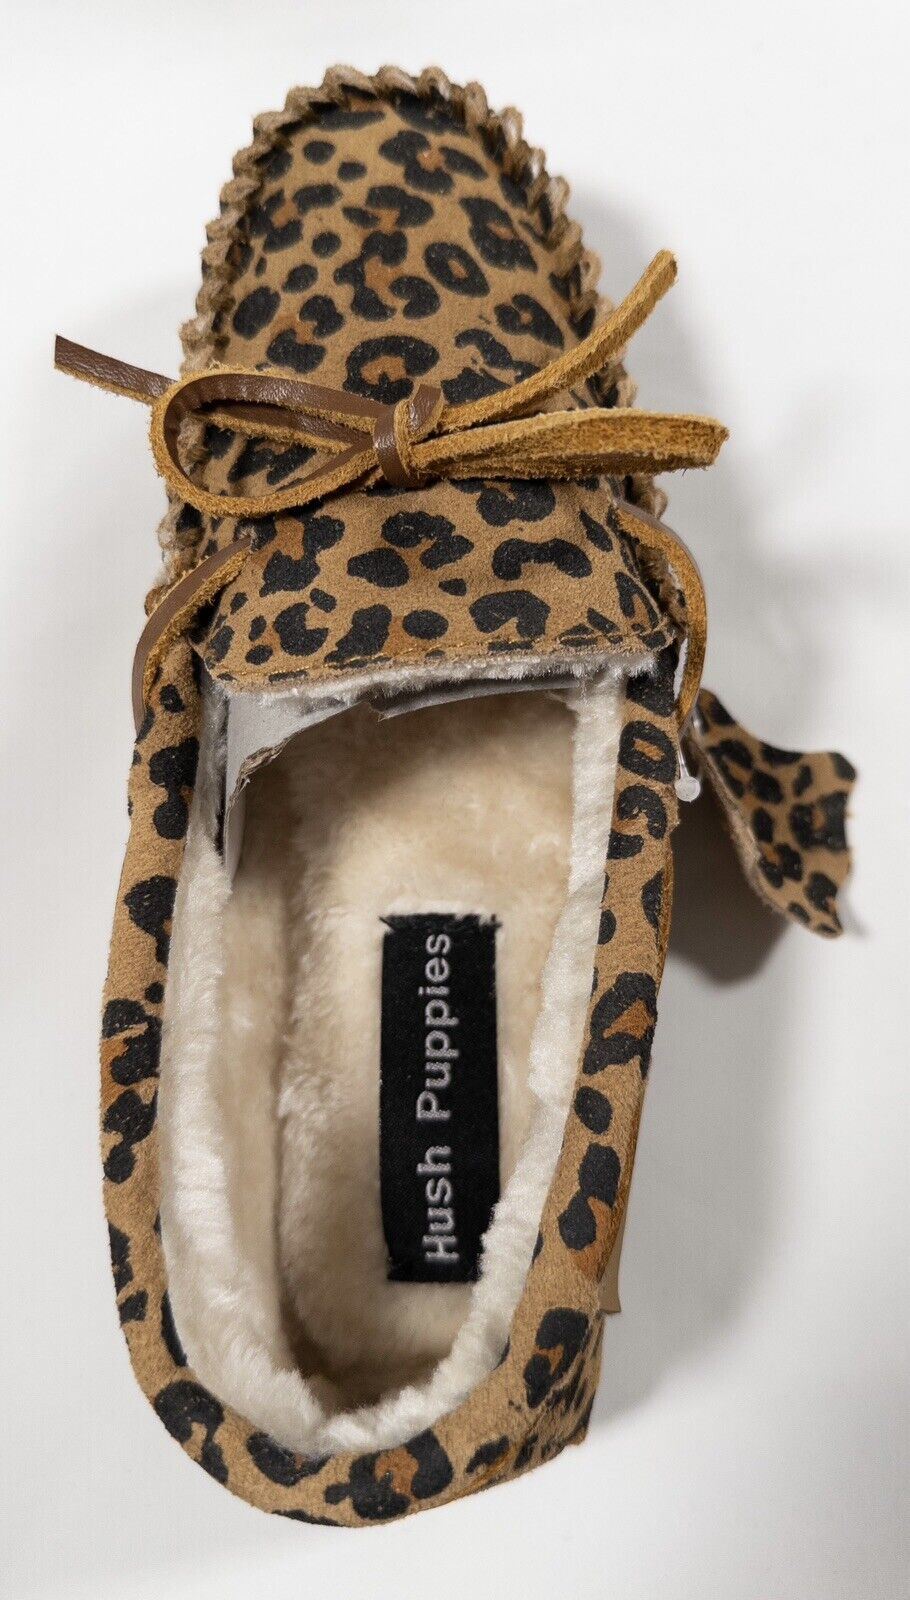 HUSH PUPPIES Womens Tan Leopard Print Slippers Leather Size UK 3 *Damaged box*